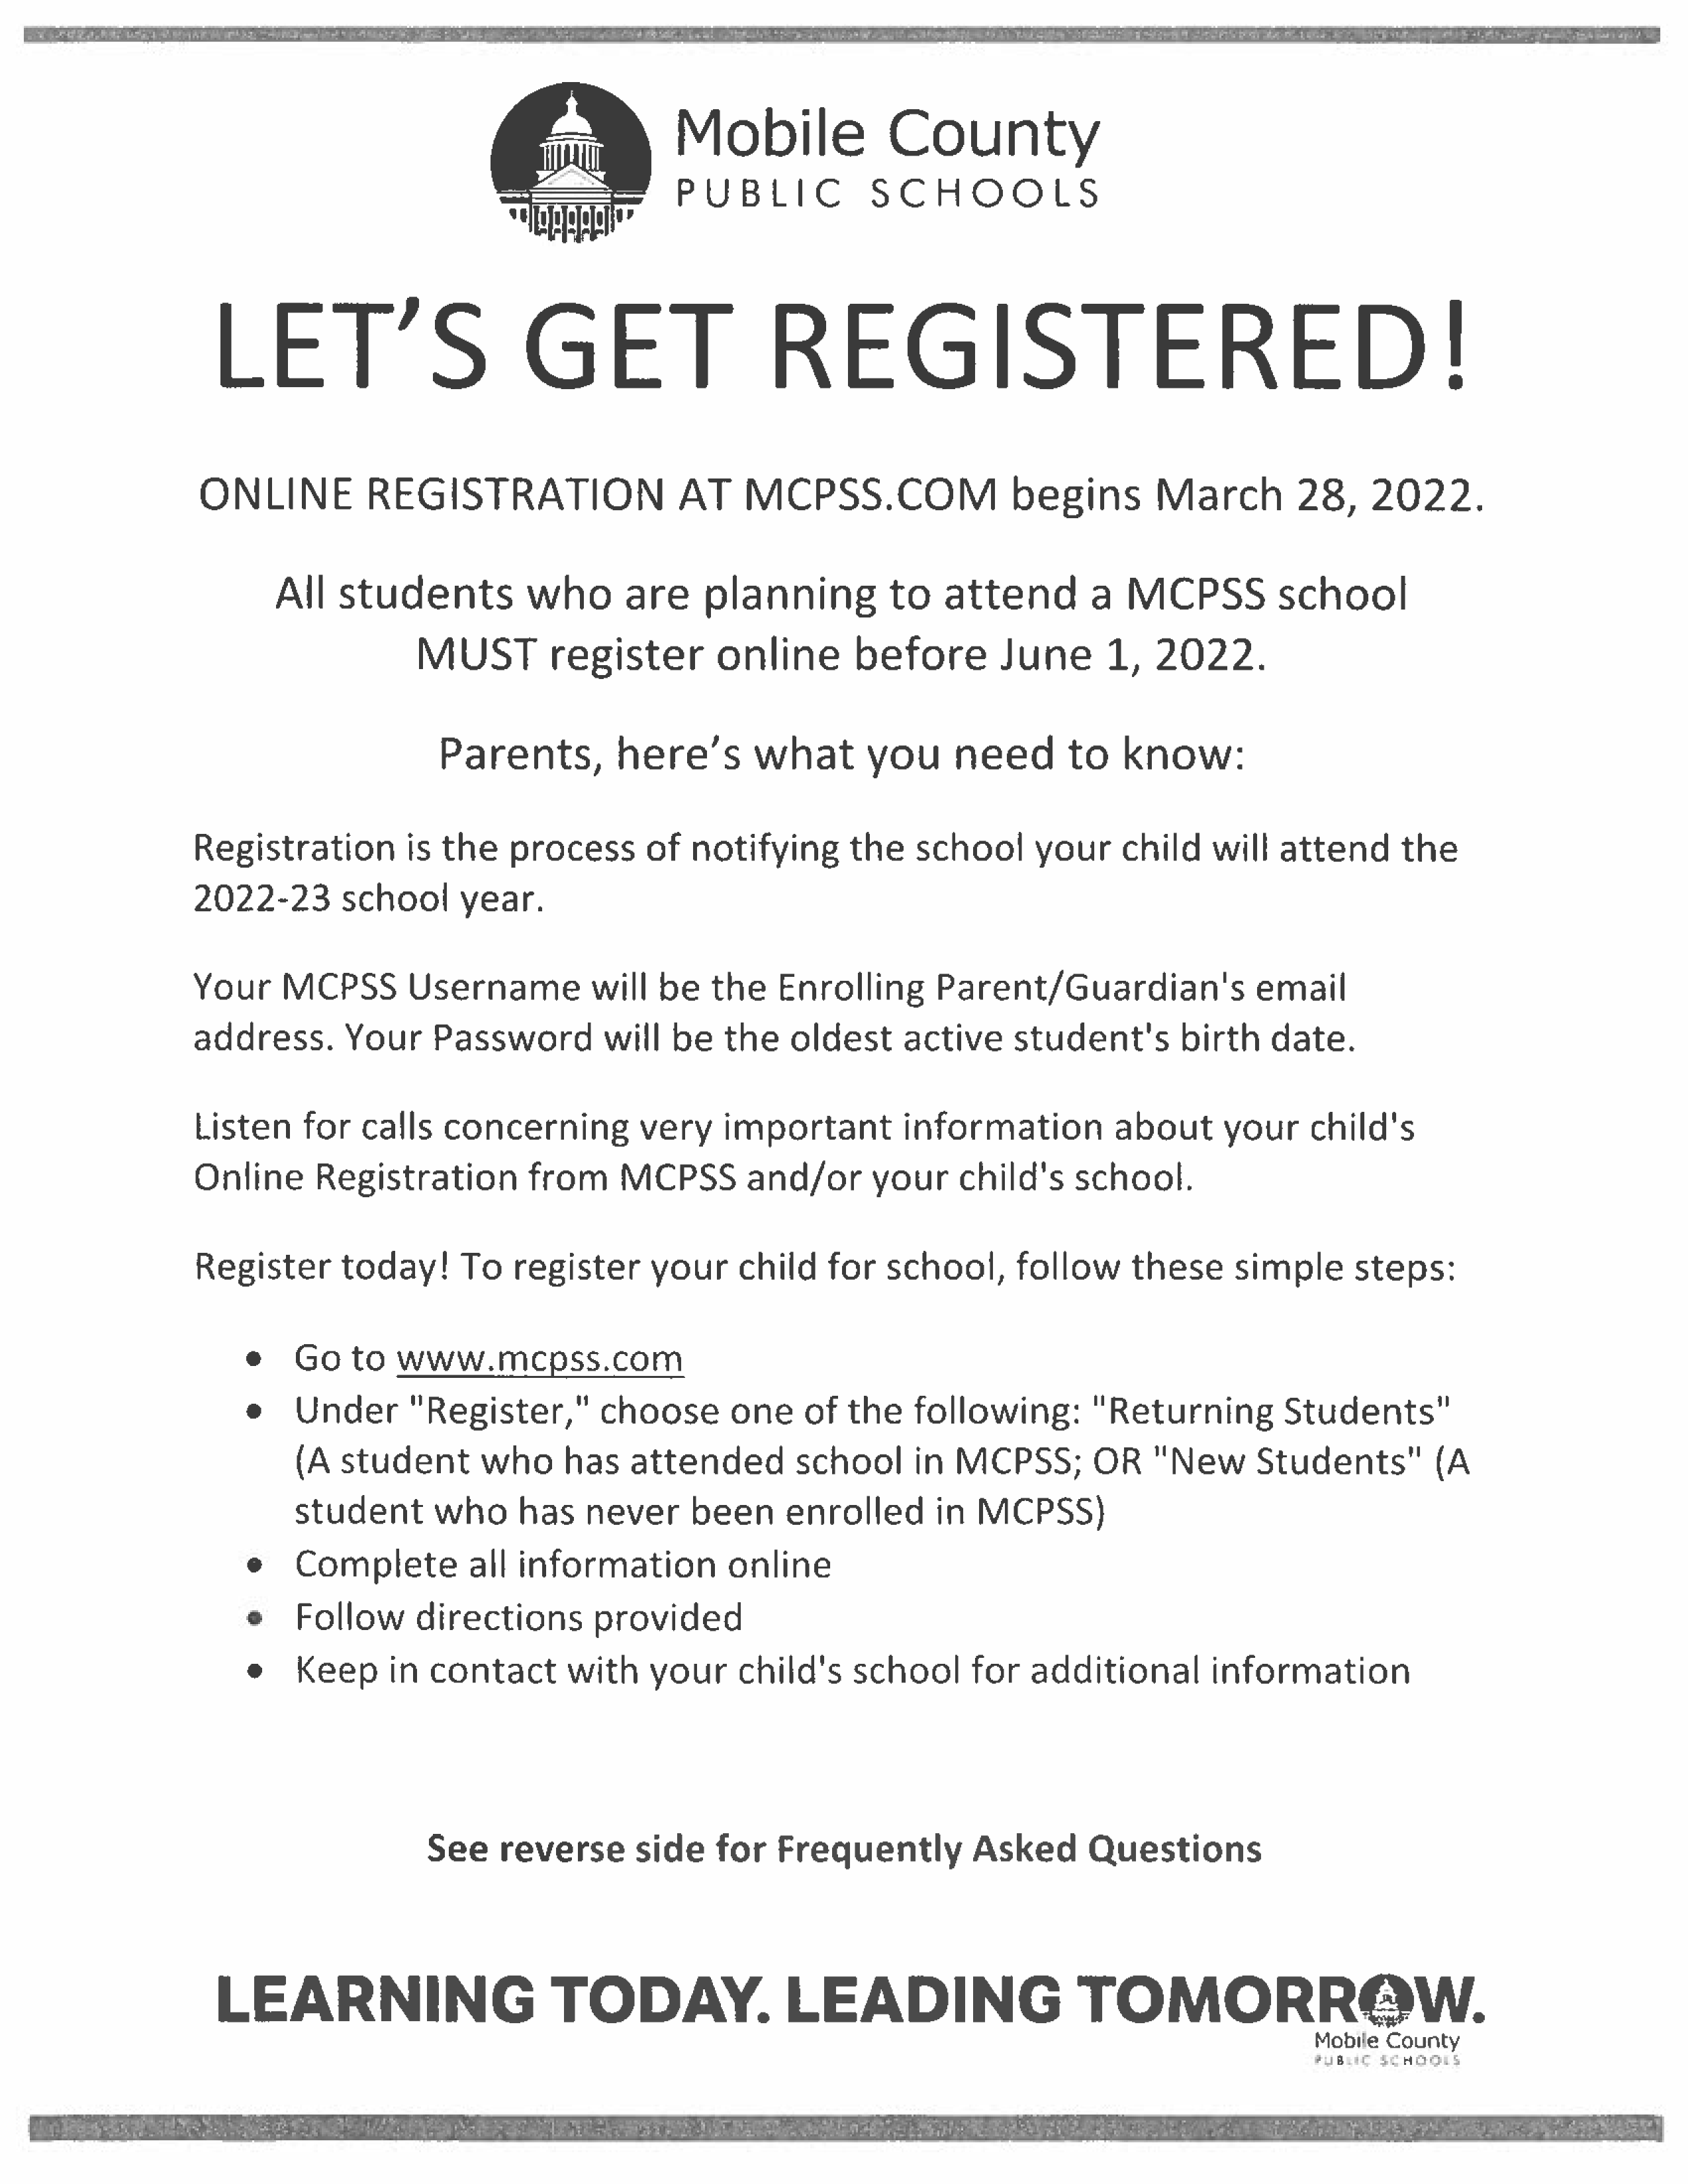 Online Student Registration Page 1